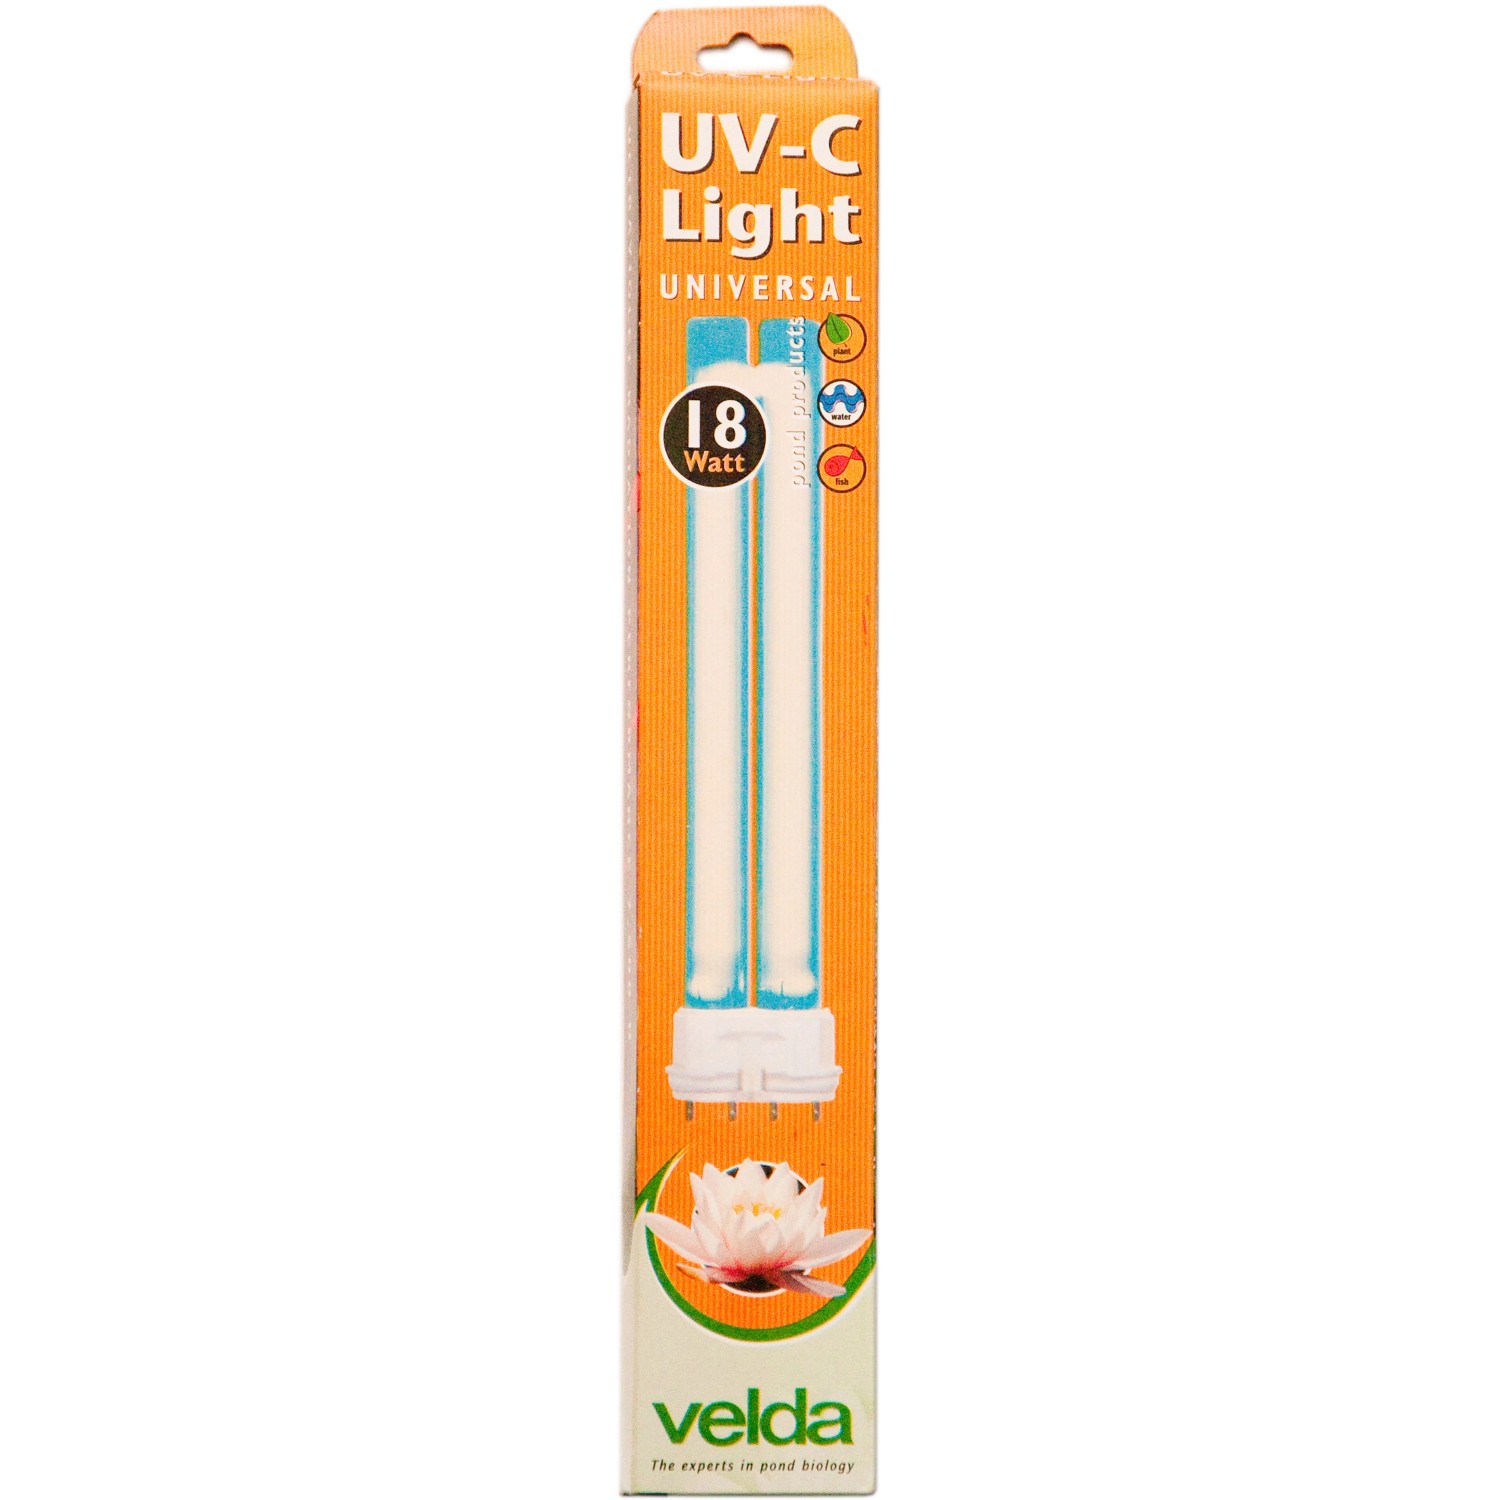 Velda UV-C PL Ersatzlampe 18 Watt von Velda